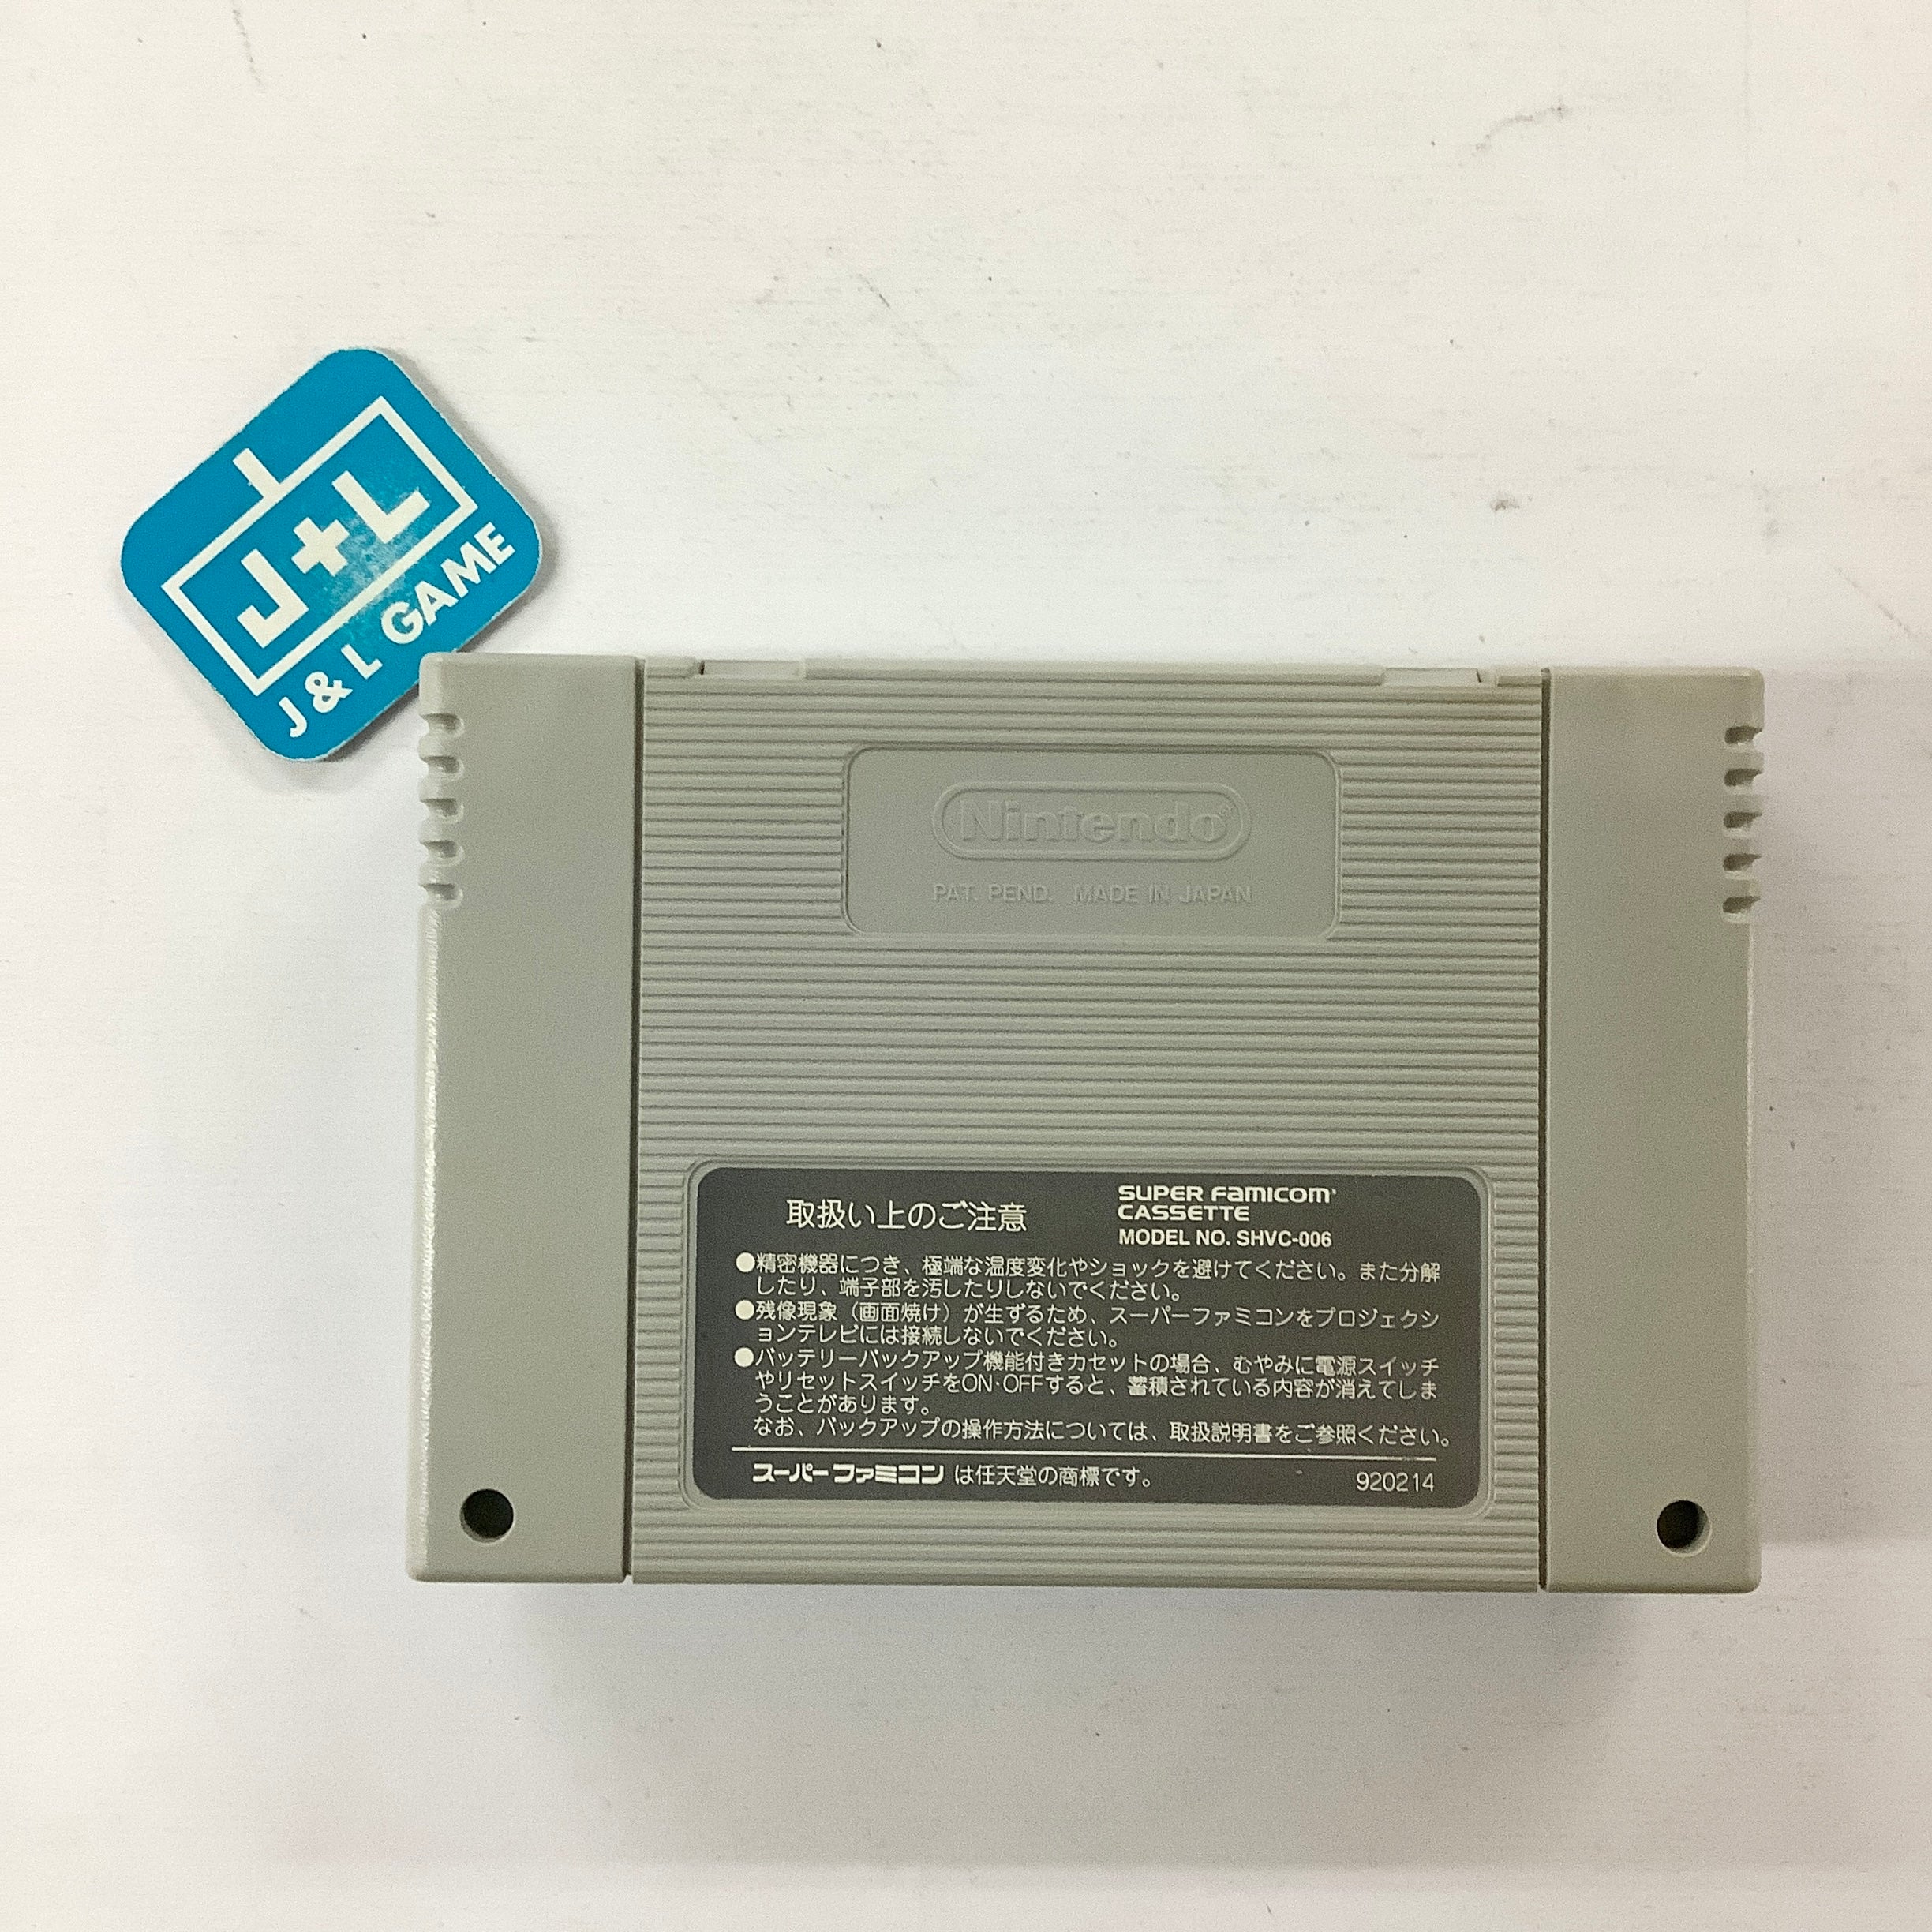 Battletech 3050 - (SFC) Super Famicom [Pre-Owned] (Japanese Import)